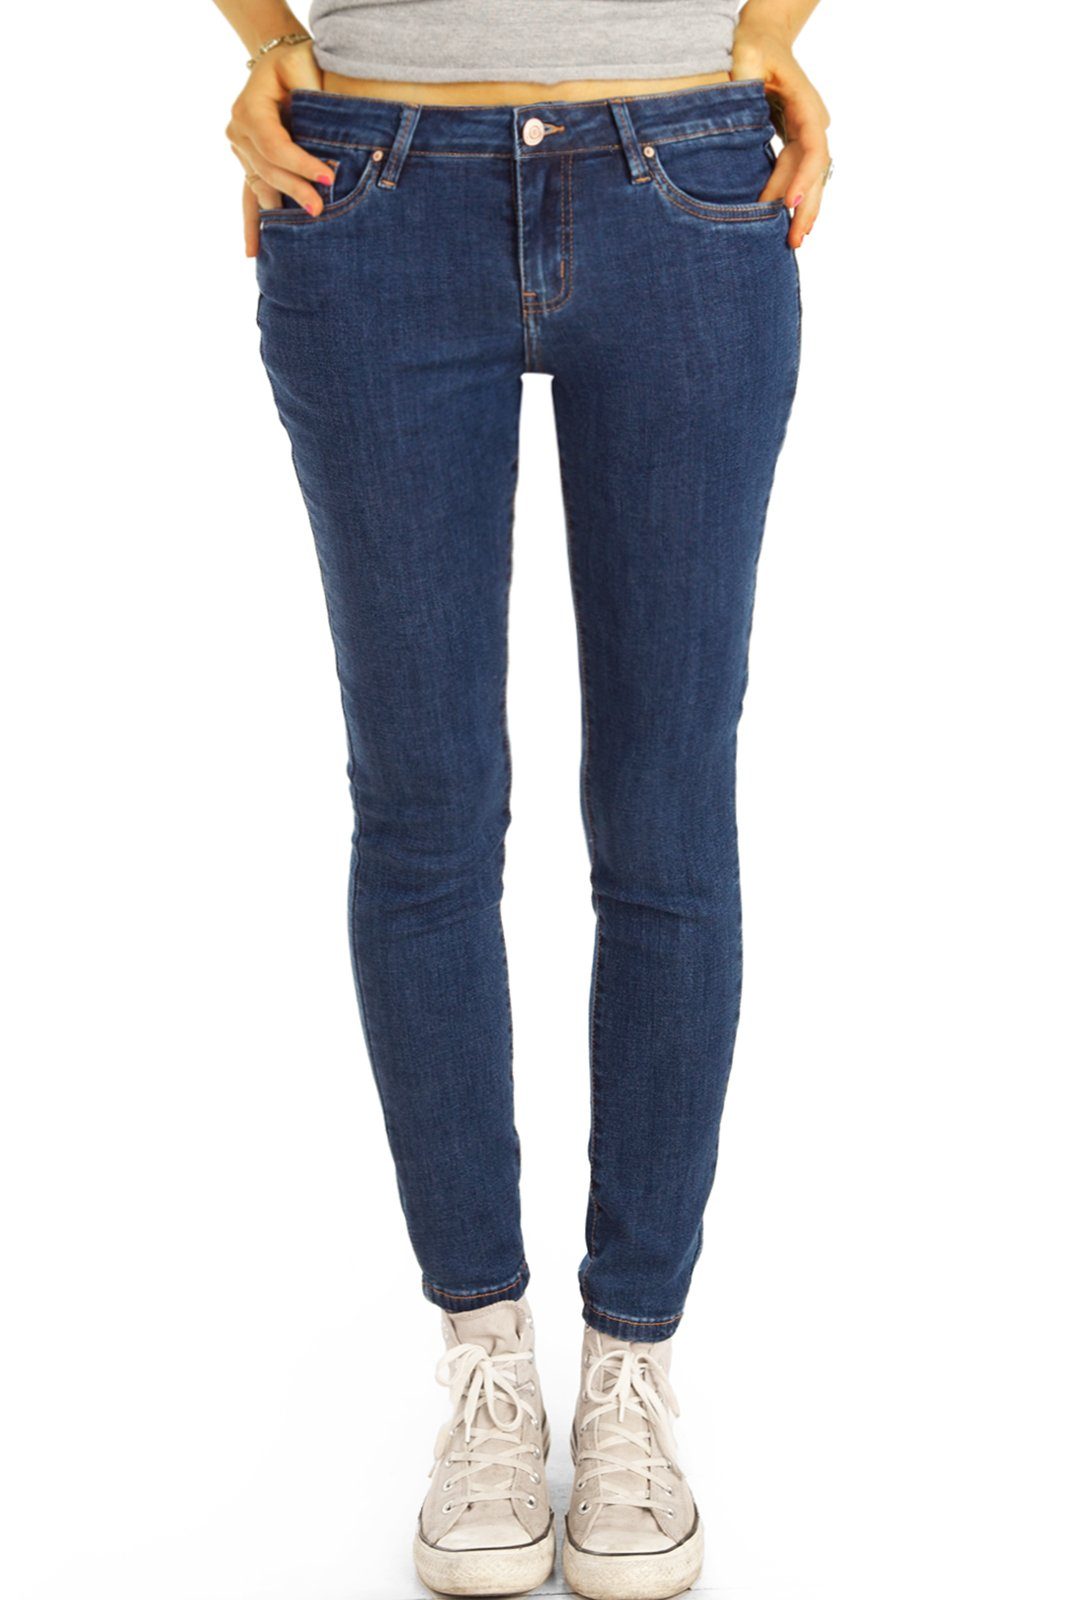 Hüftjeans Stretch-Anteil, - 5-Pocket-Style Hose j27p-1 Skinny be Low-rise-Jeans Damen- - Stretch slim styled Röhrenjeans hellblau mit